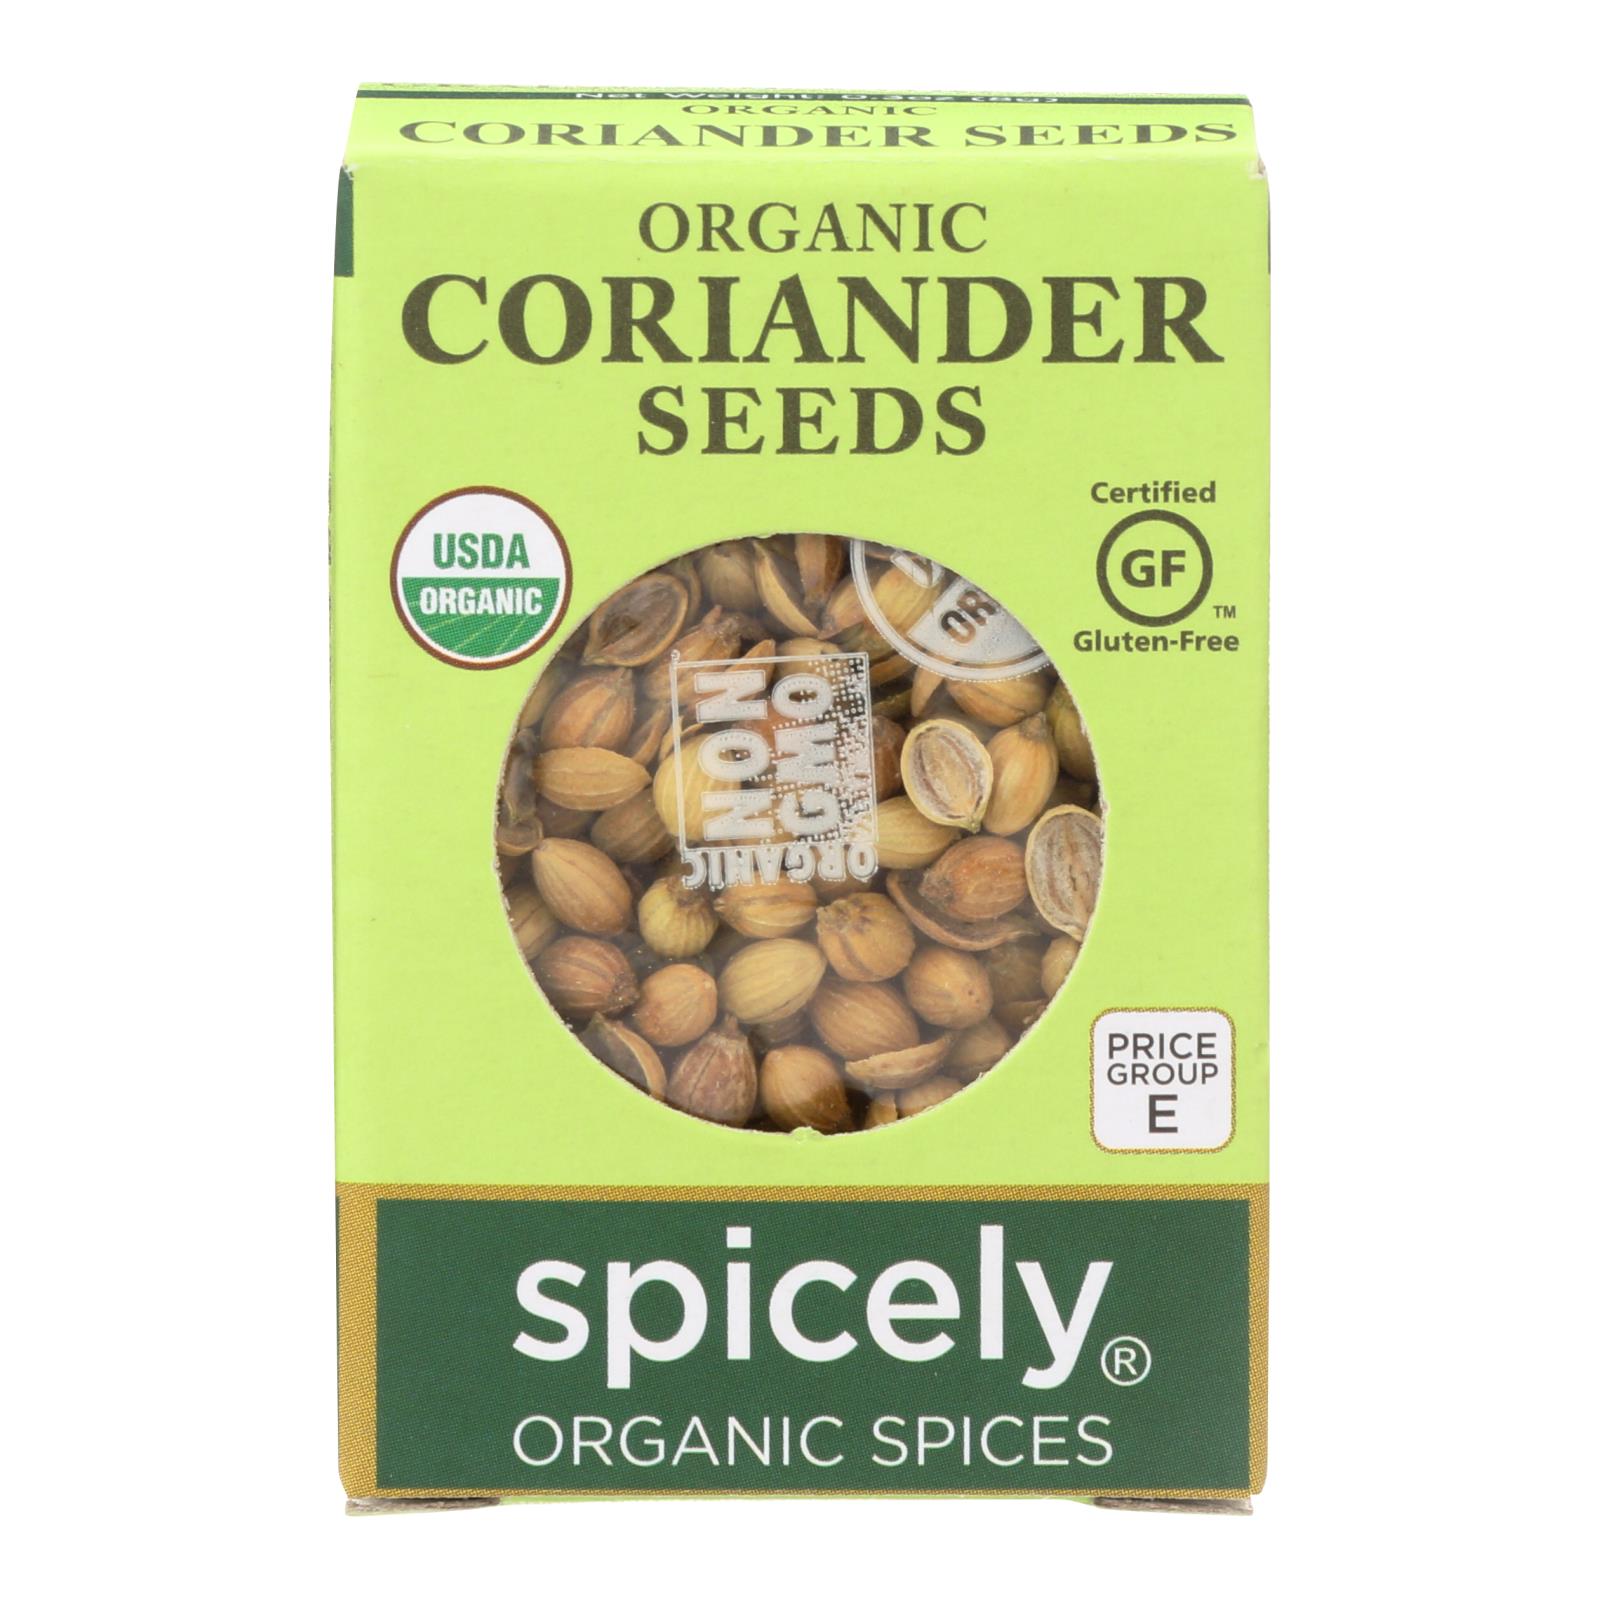 Spicely Organics - Organic Coriander Seed - 6개 묶음상품 - 0.3 oz.